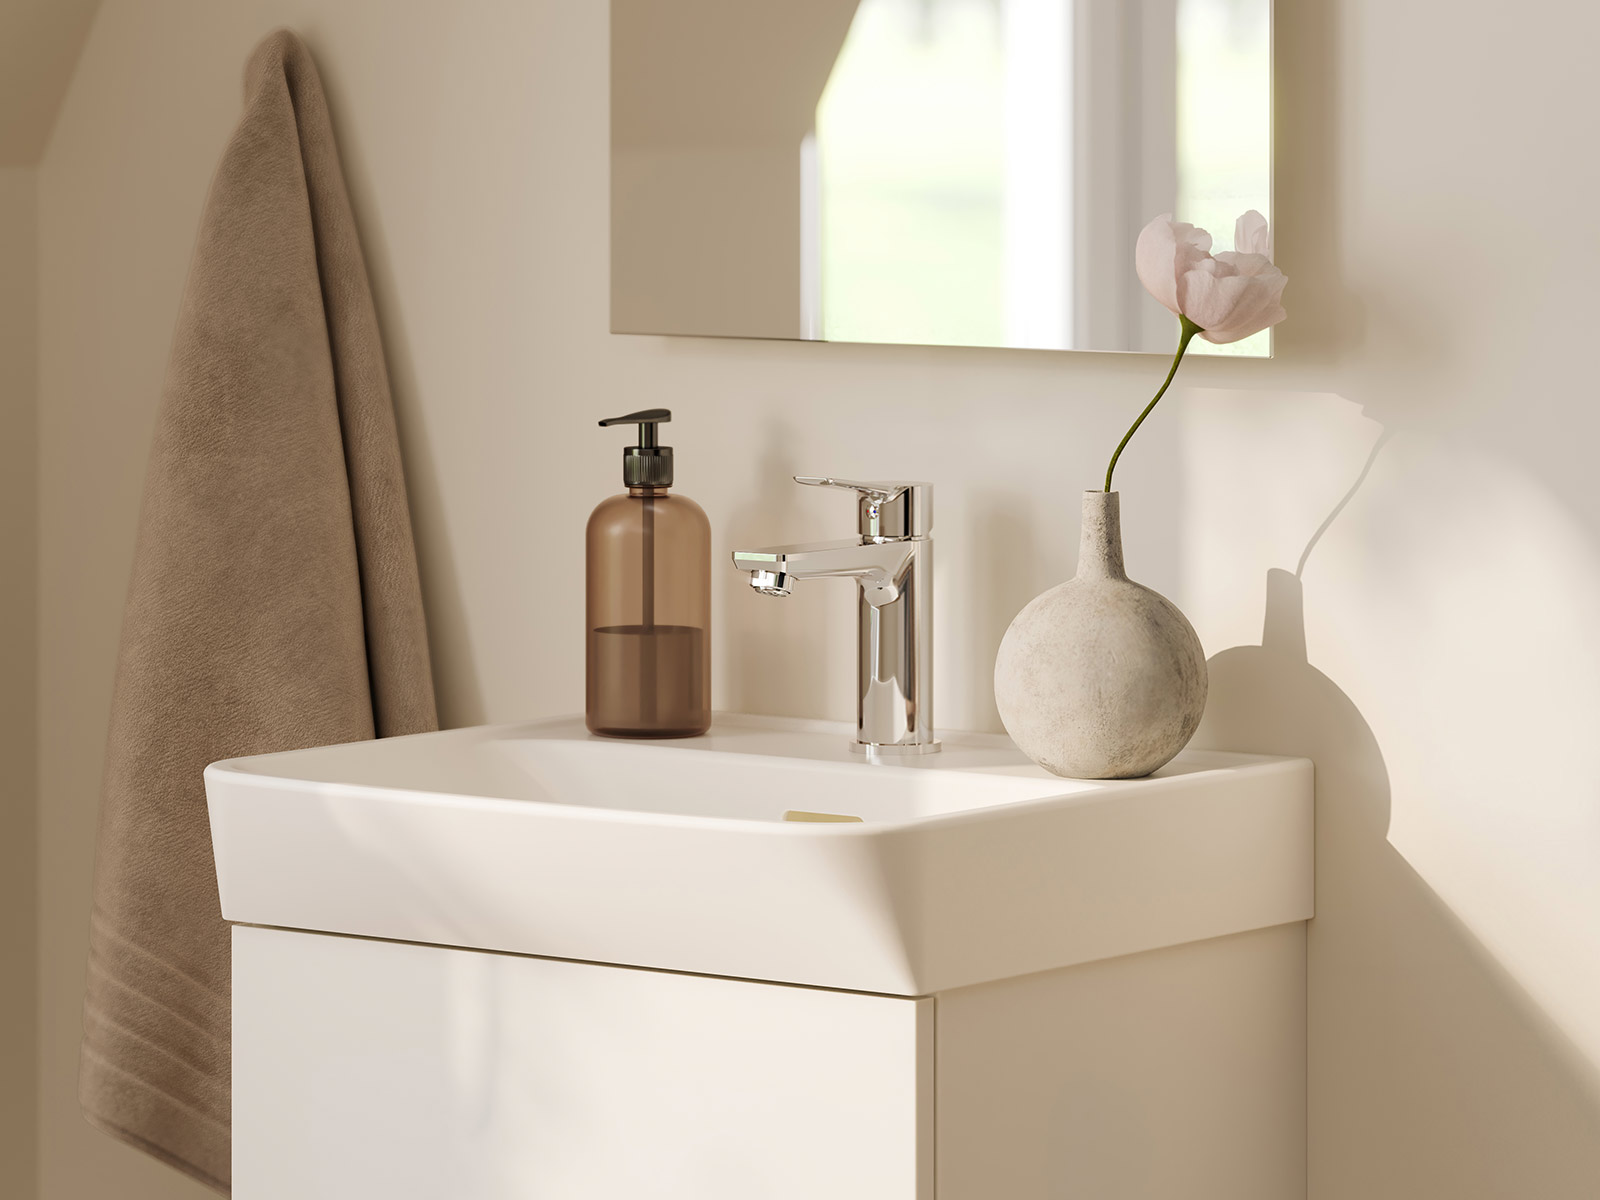 Tarju – lille, tidssvarende håndvaskarmatur, som passer til mindre håndvaske.